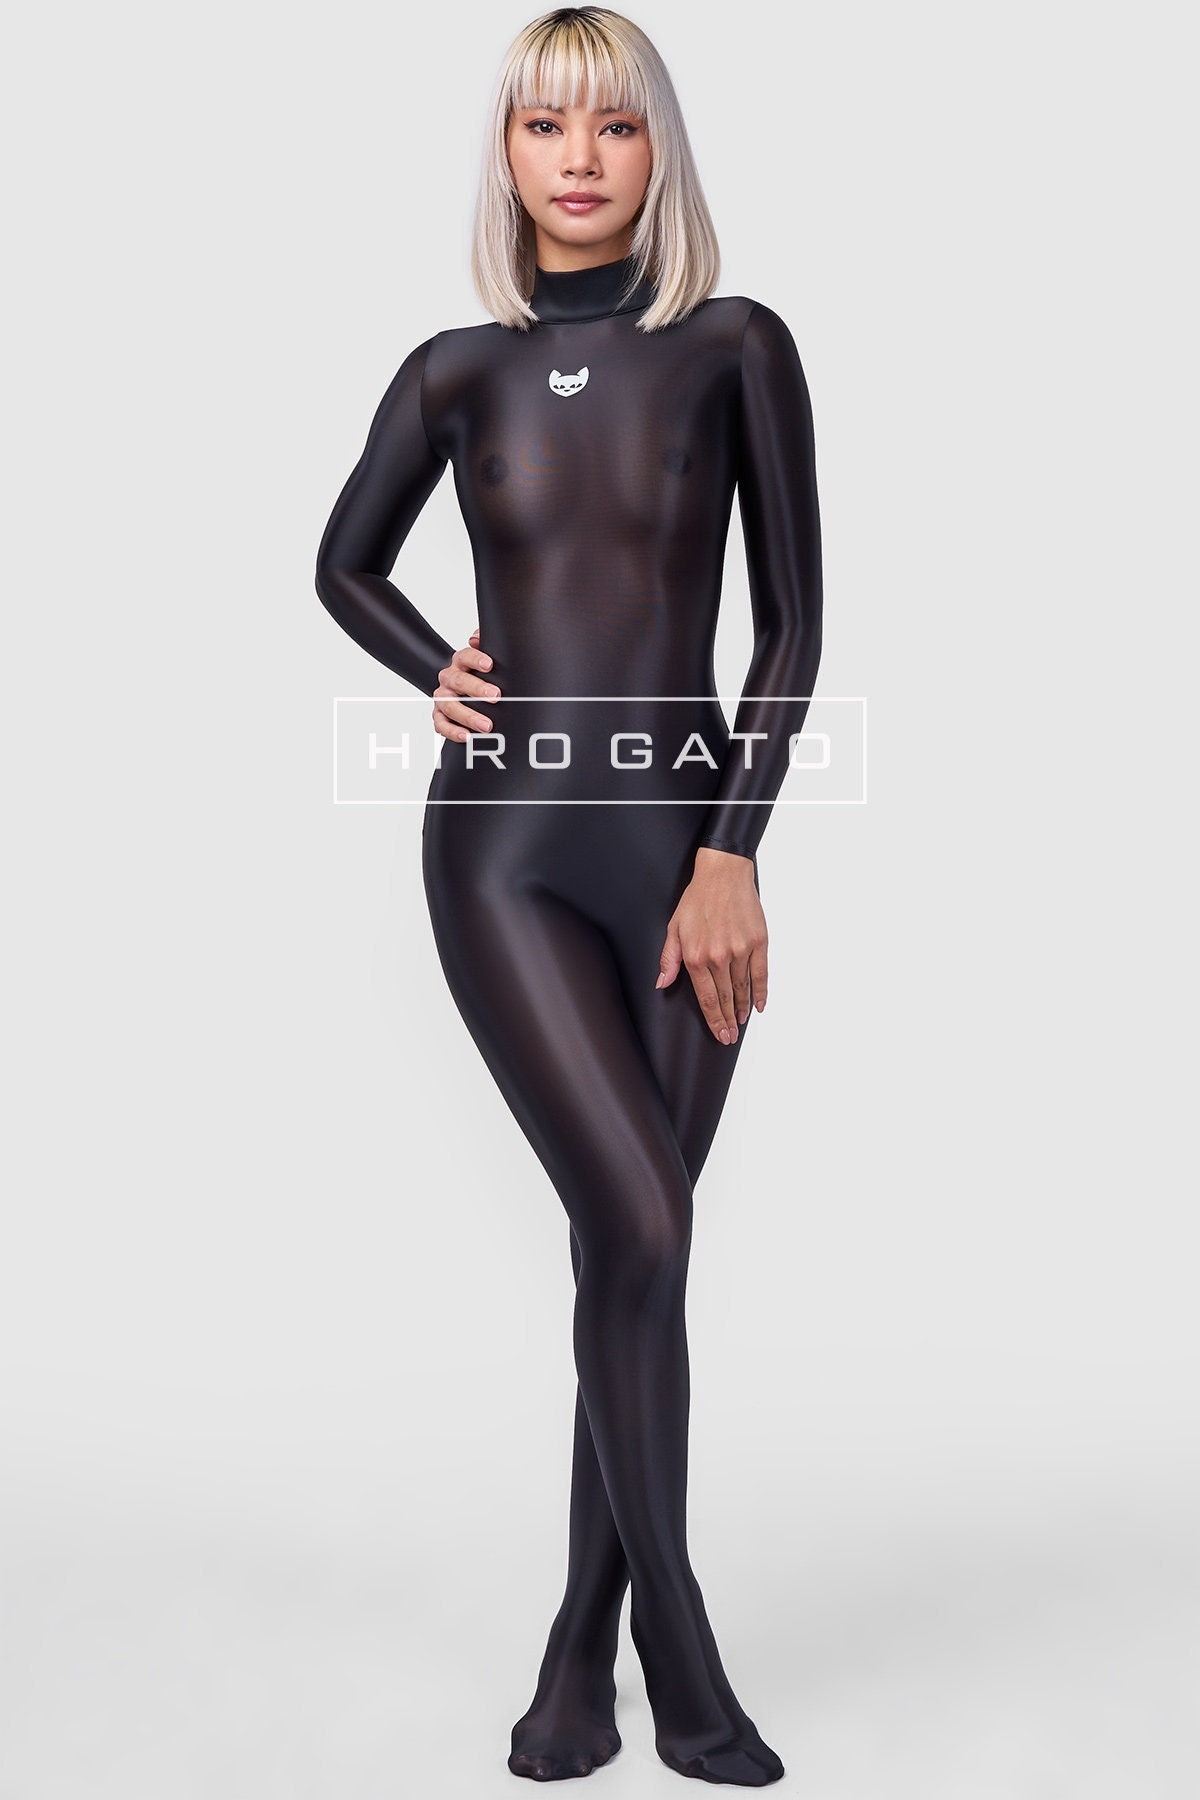 Buy HIRO GATO Sheer Nylon Spandex Catsuit Black Burning Suit Rave Party  Zentai Bodysuit Transparent See Through Online in India 